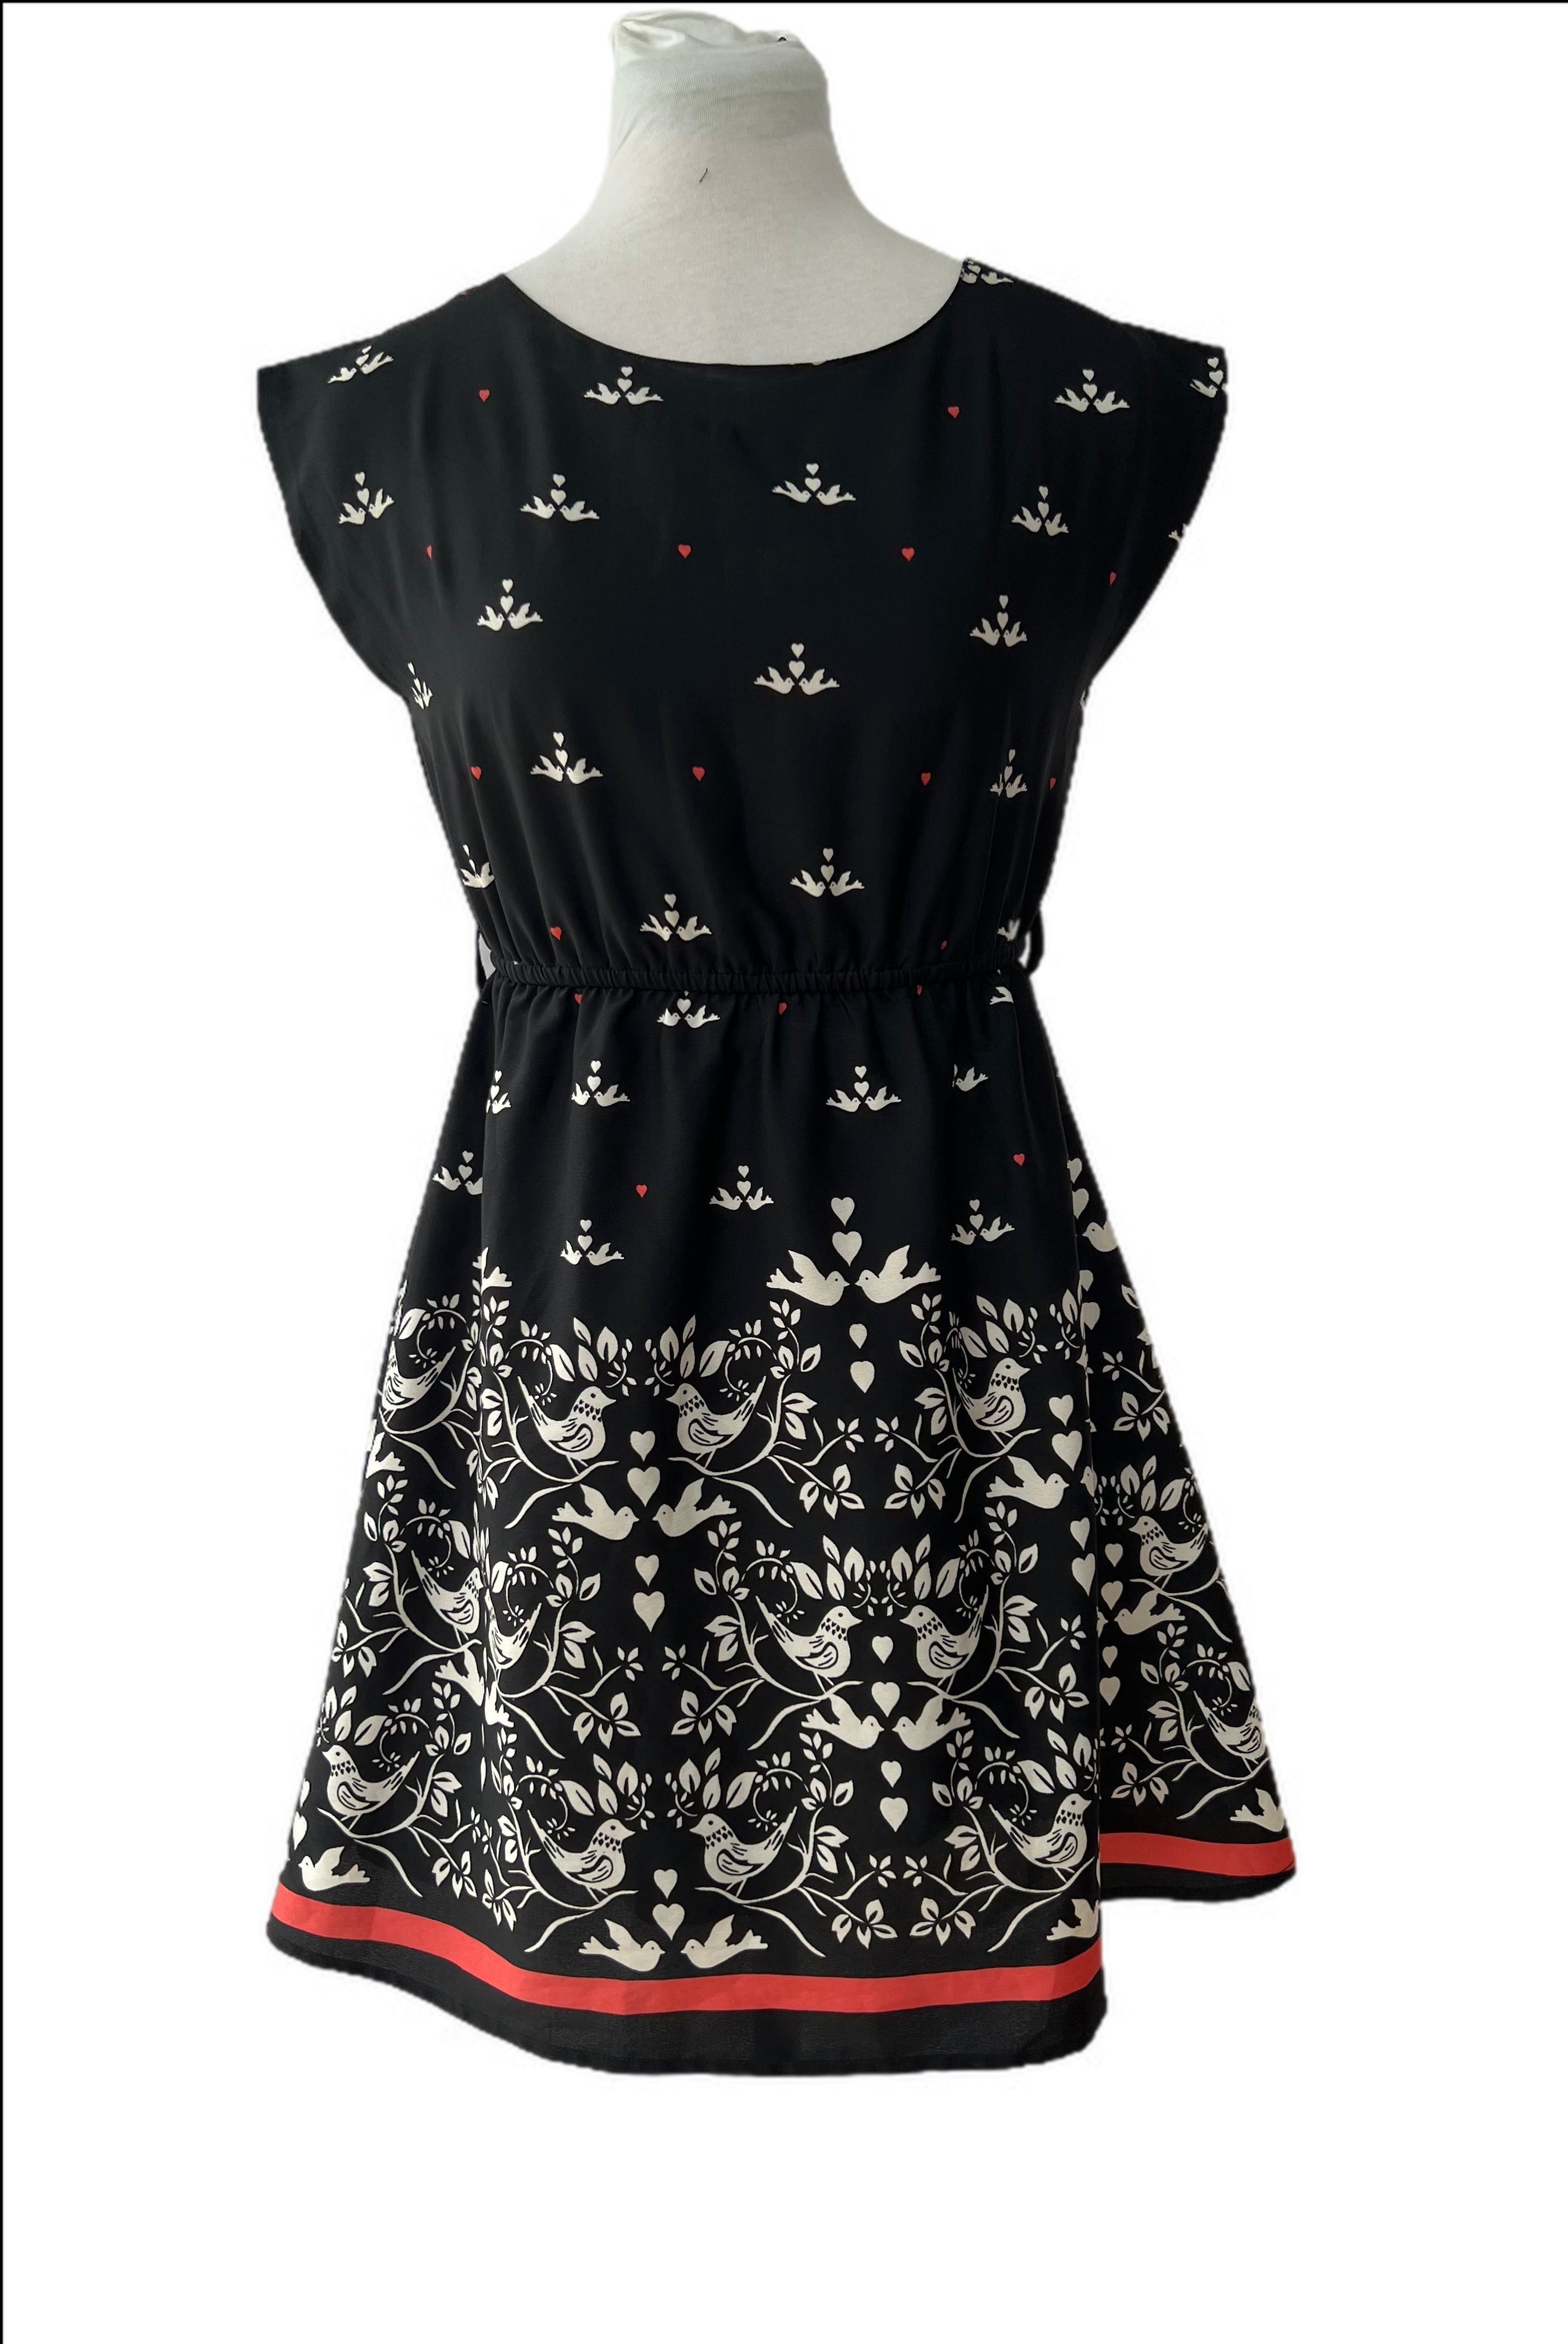 Sleeveless Dress with Love Bird Print, Belt loops